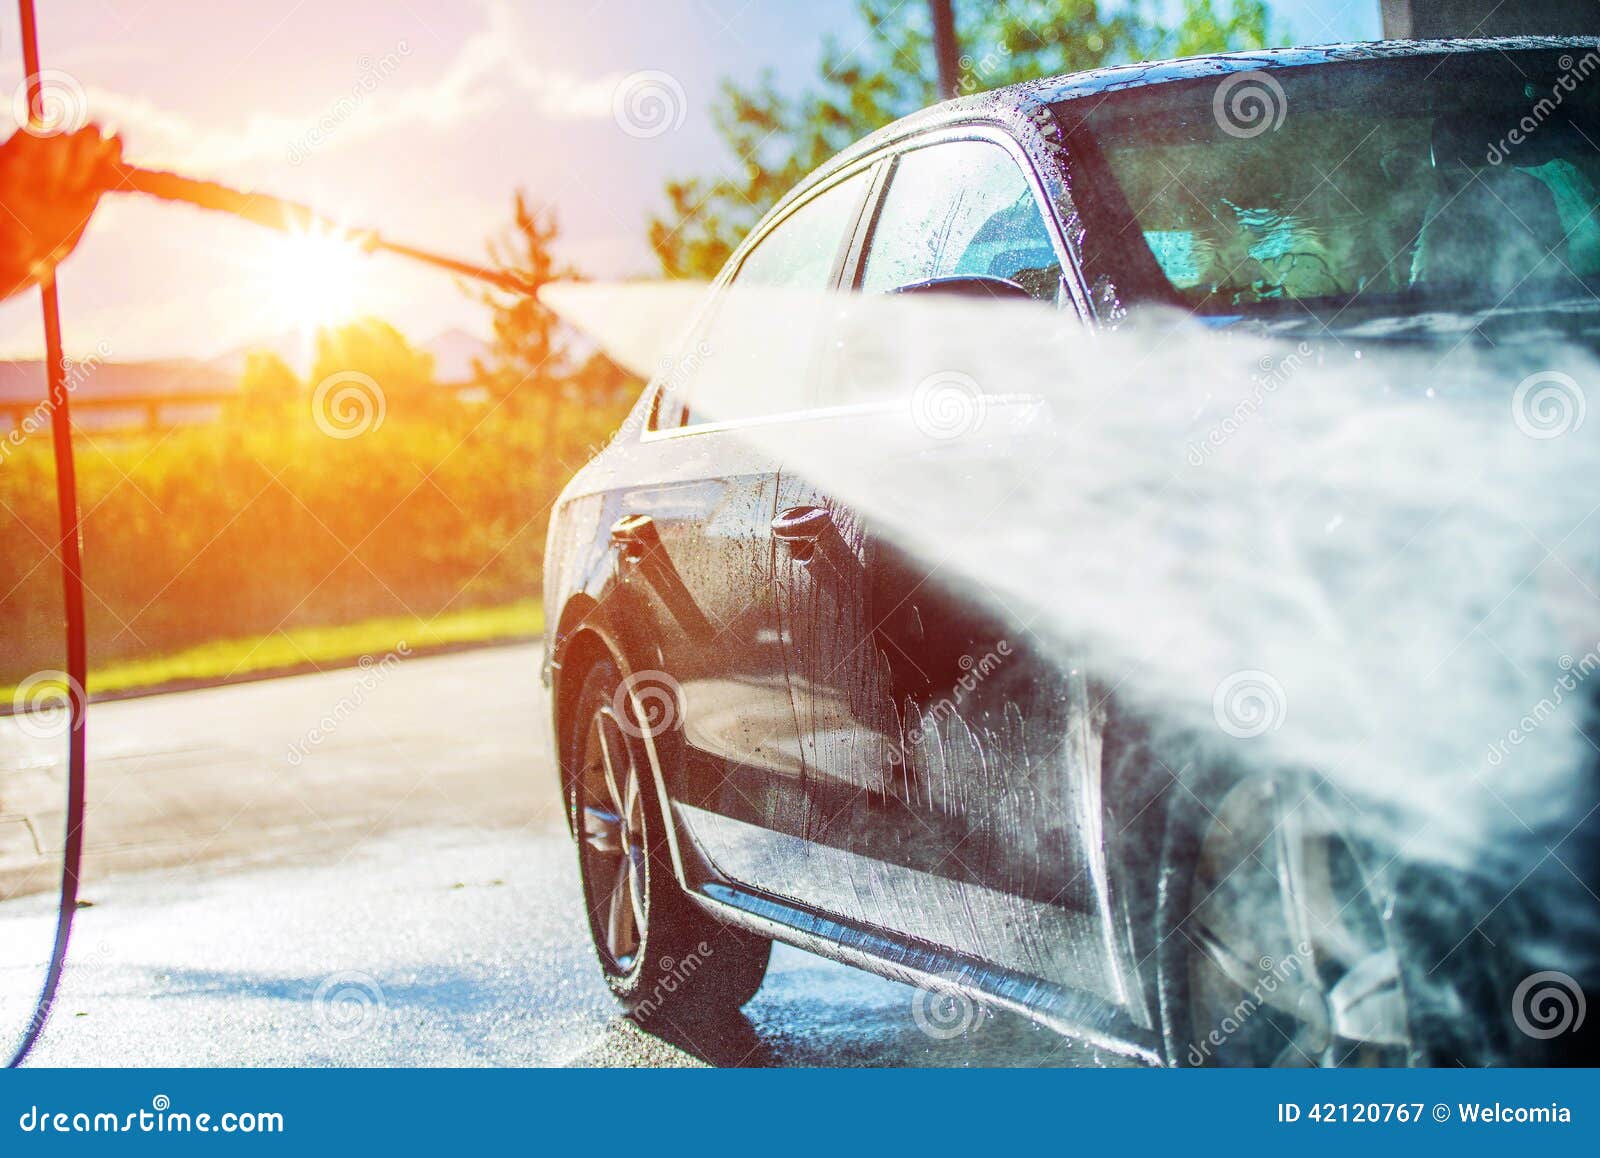 summer car washing